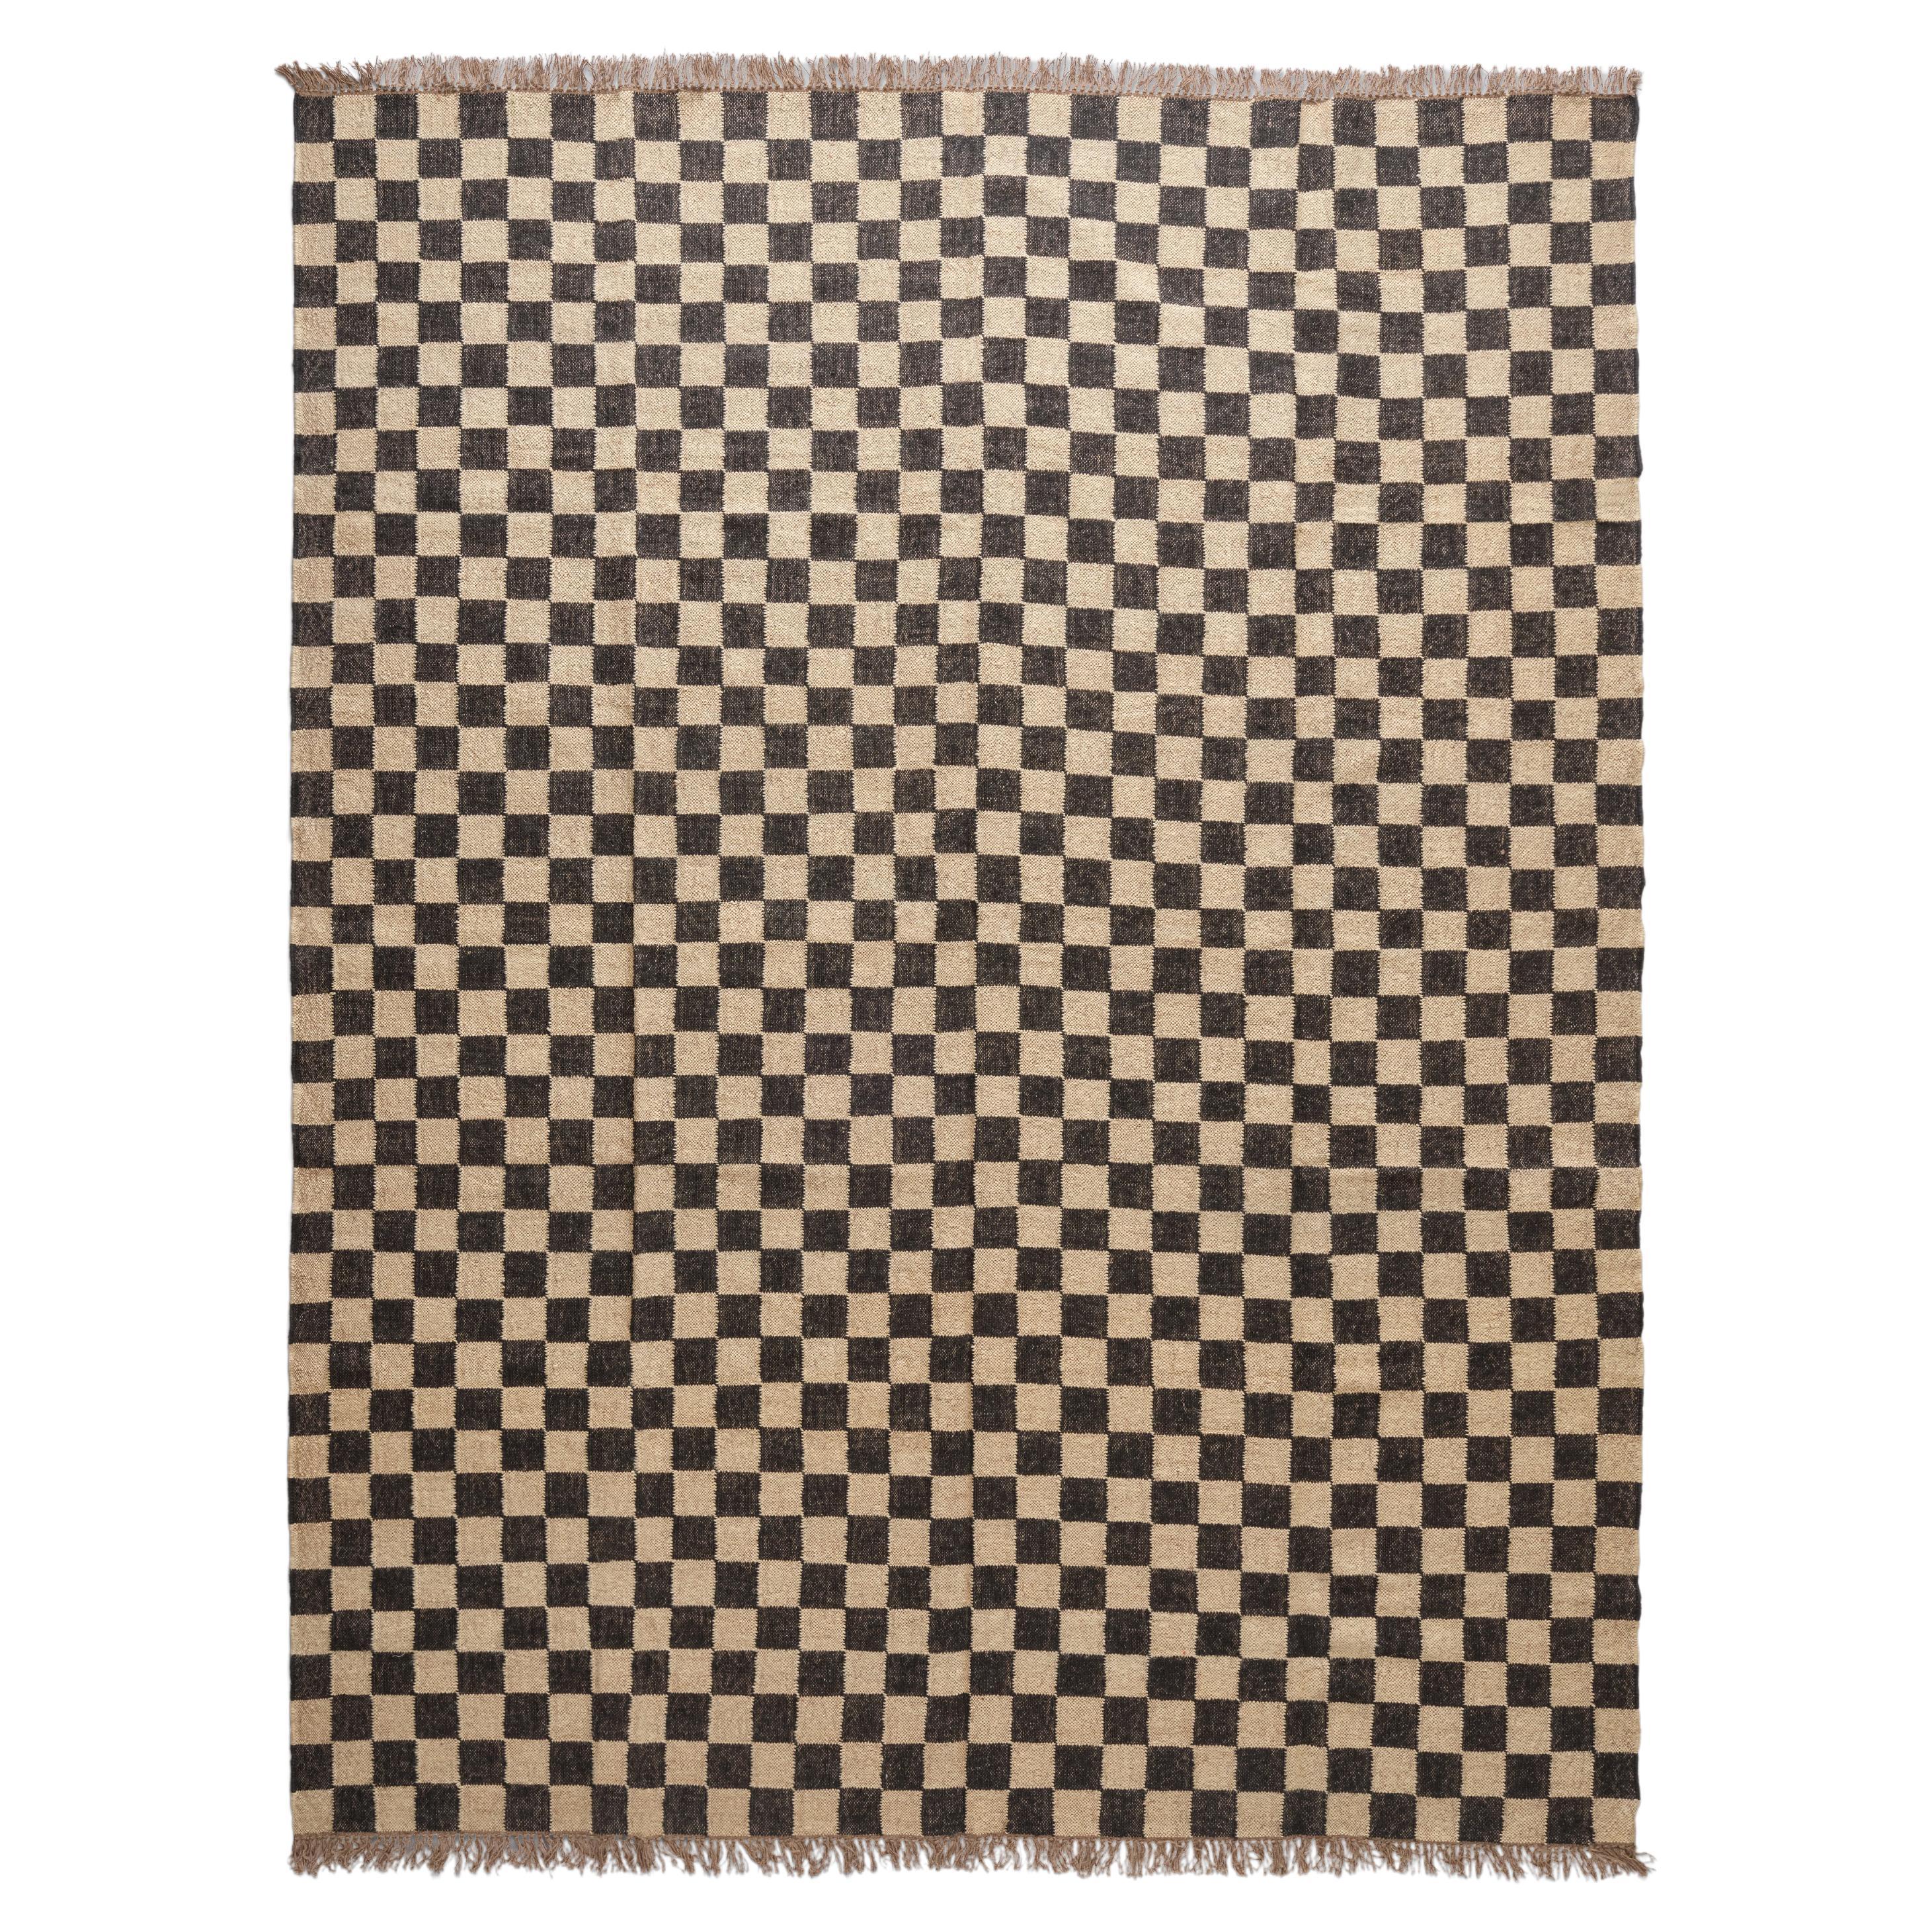 The Forsyth Checkerboard Rug - Off Black, 9x12